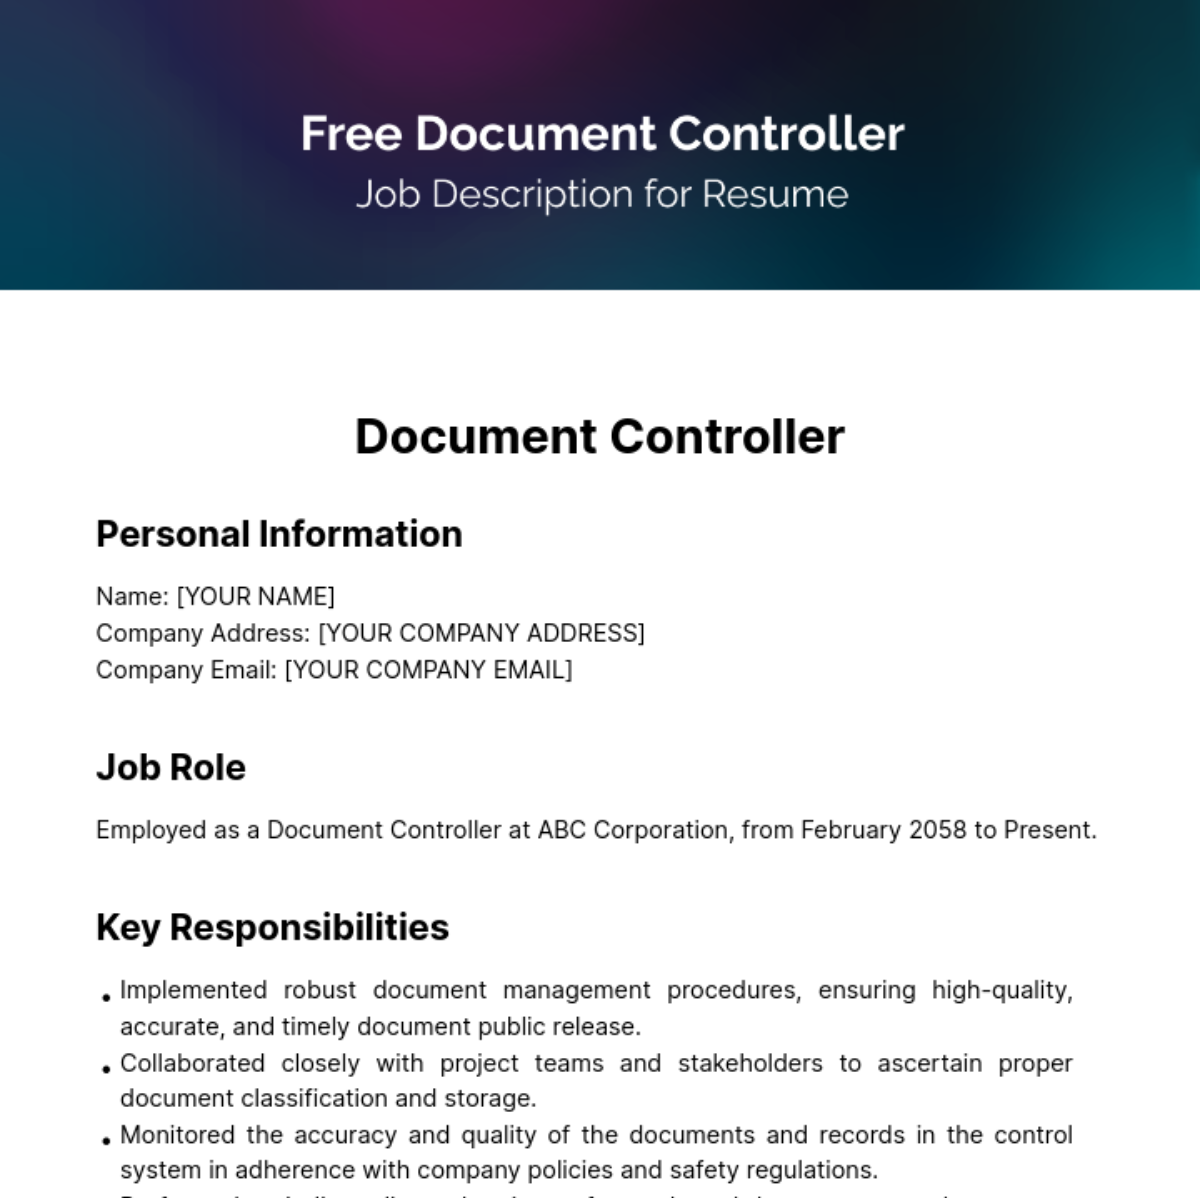 Free Document Controller Job Description for Resume Template